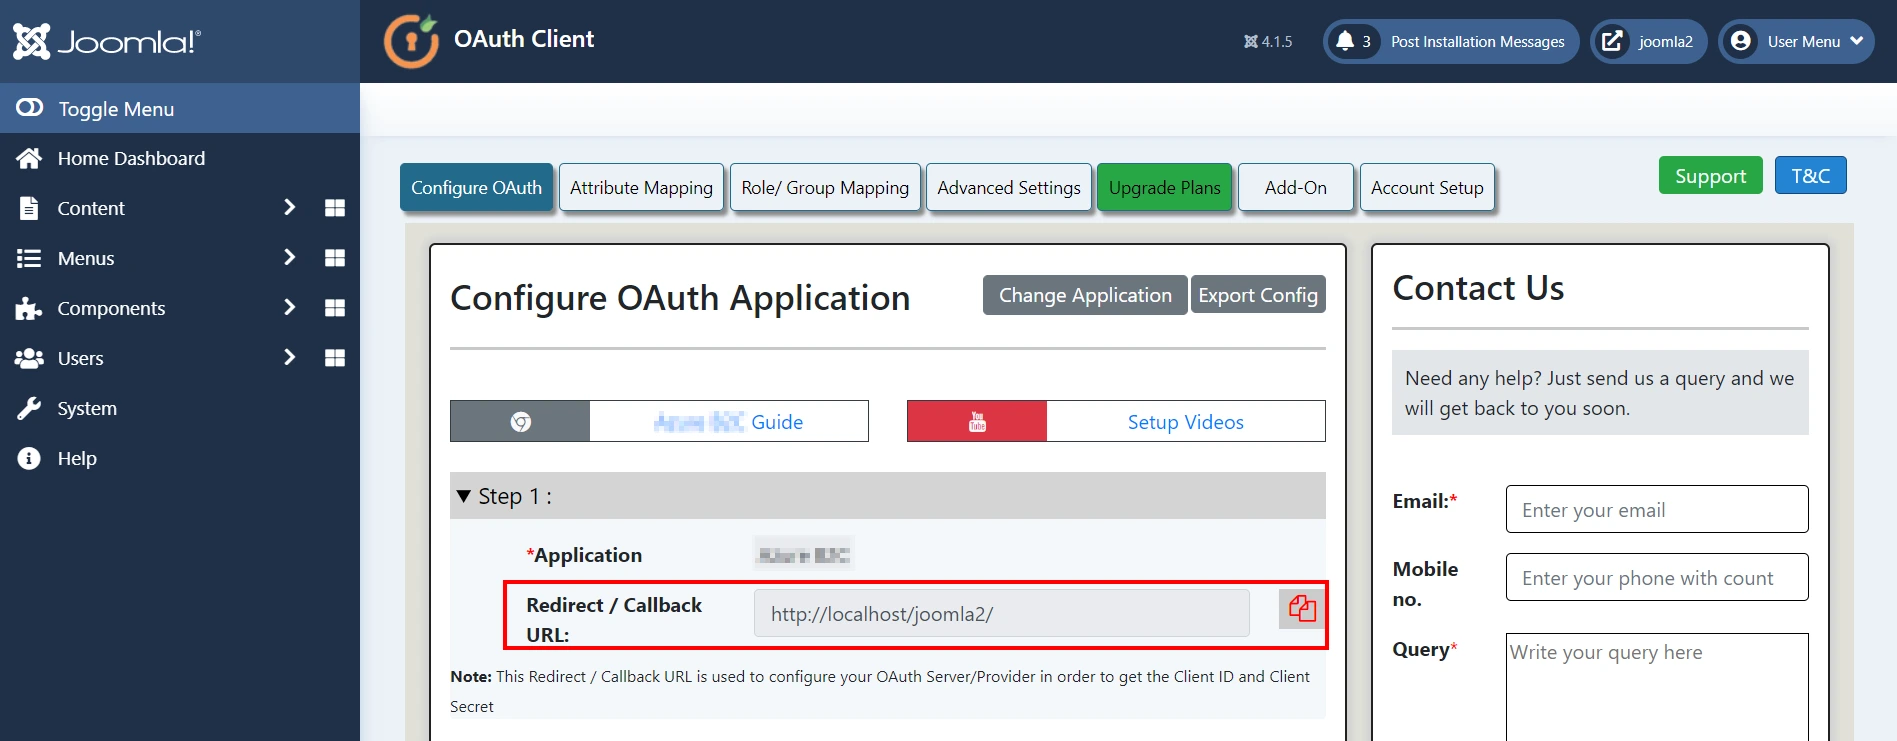 Yahoo Single Sign-On (SSO) OAuth/OpenID